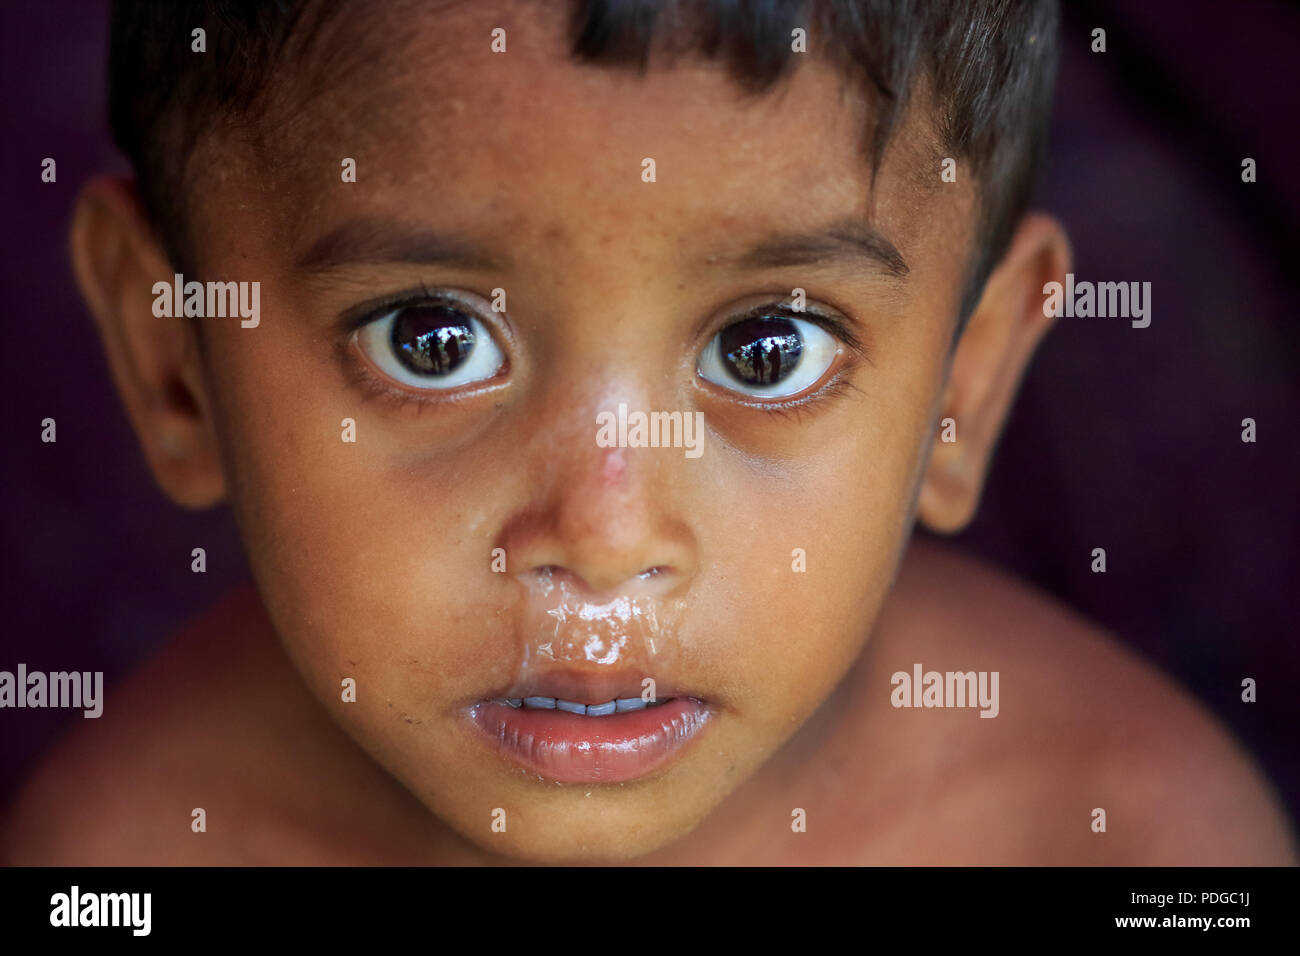 A Rohingya refugee boy at Balukhali Refugee Camp. Cox's Bazar, Bangladesh Stock Photo